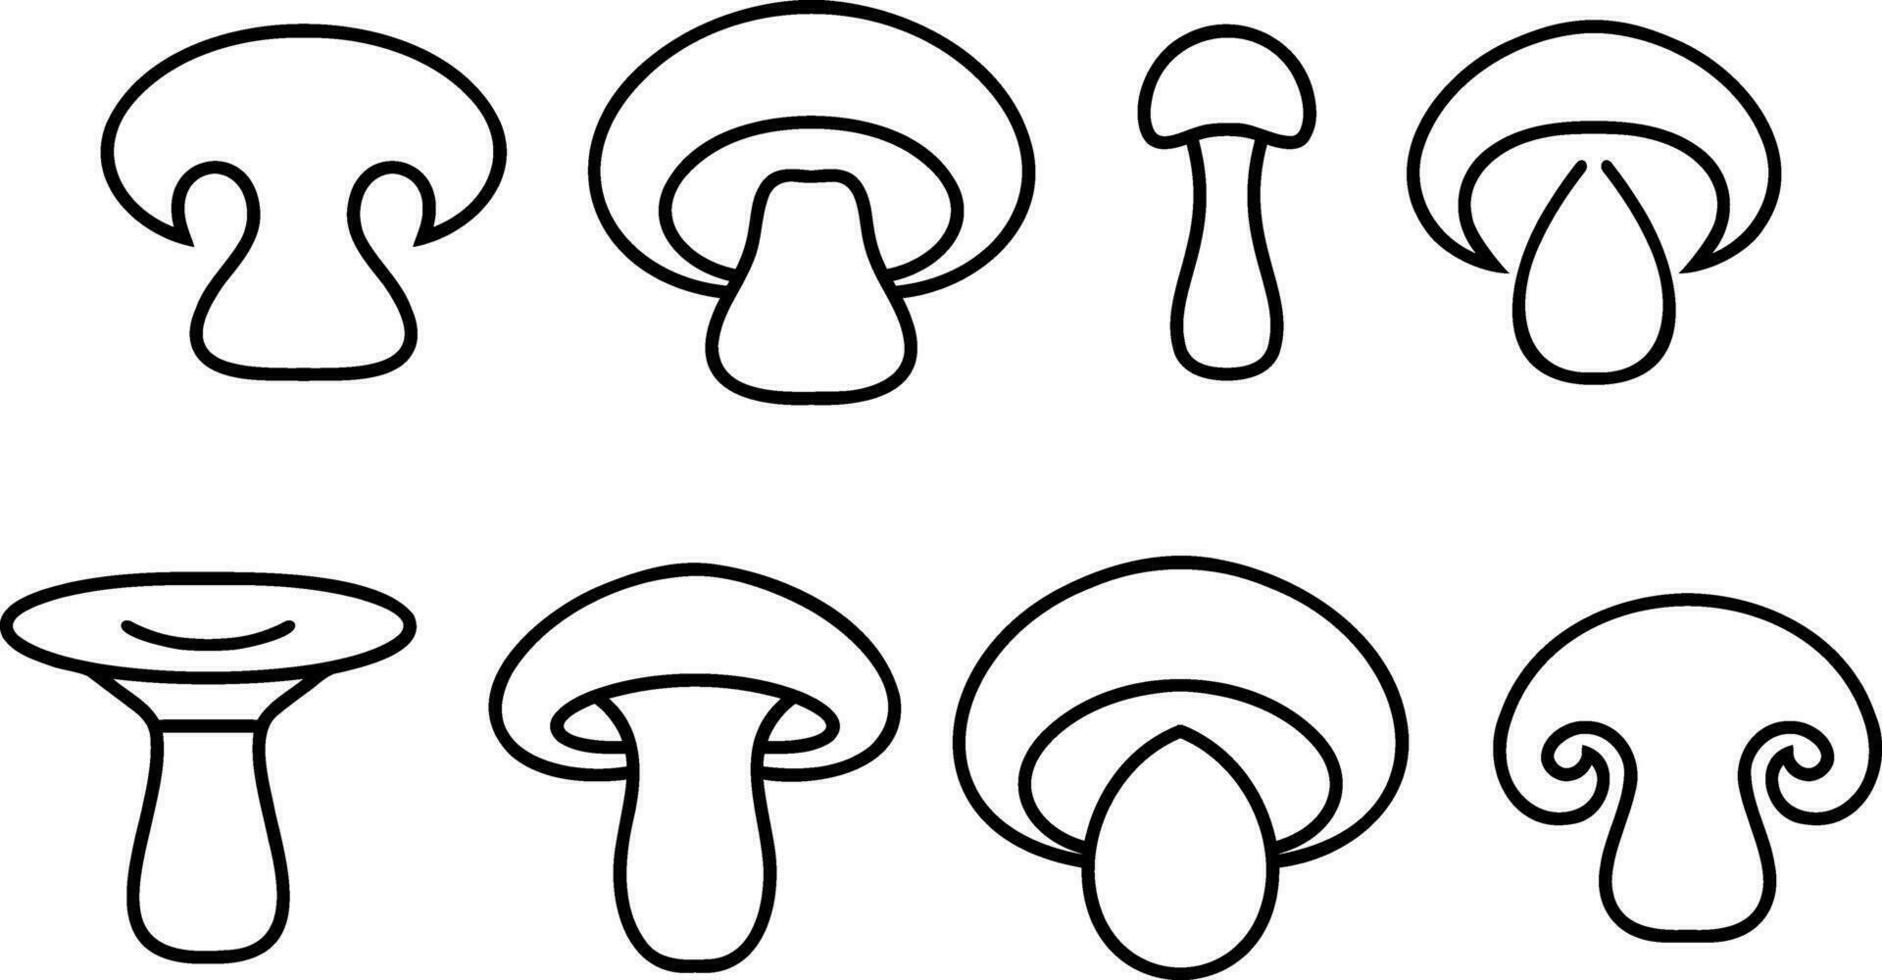 Doodle mushroom icon Vegetable healthy food Stencil vector illustration